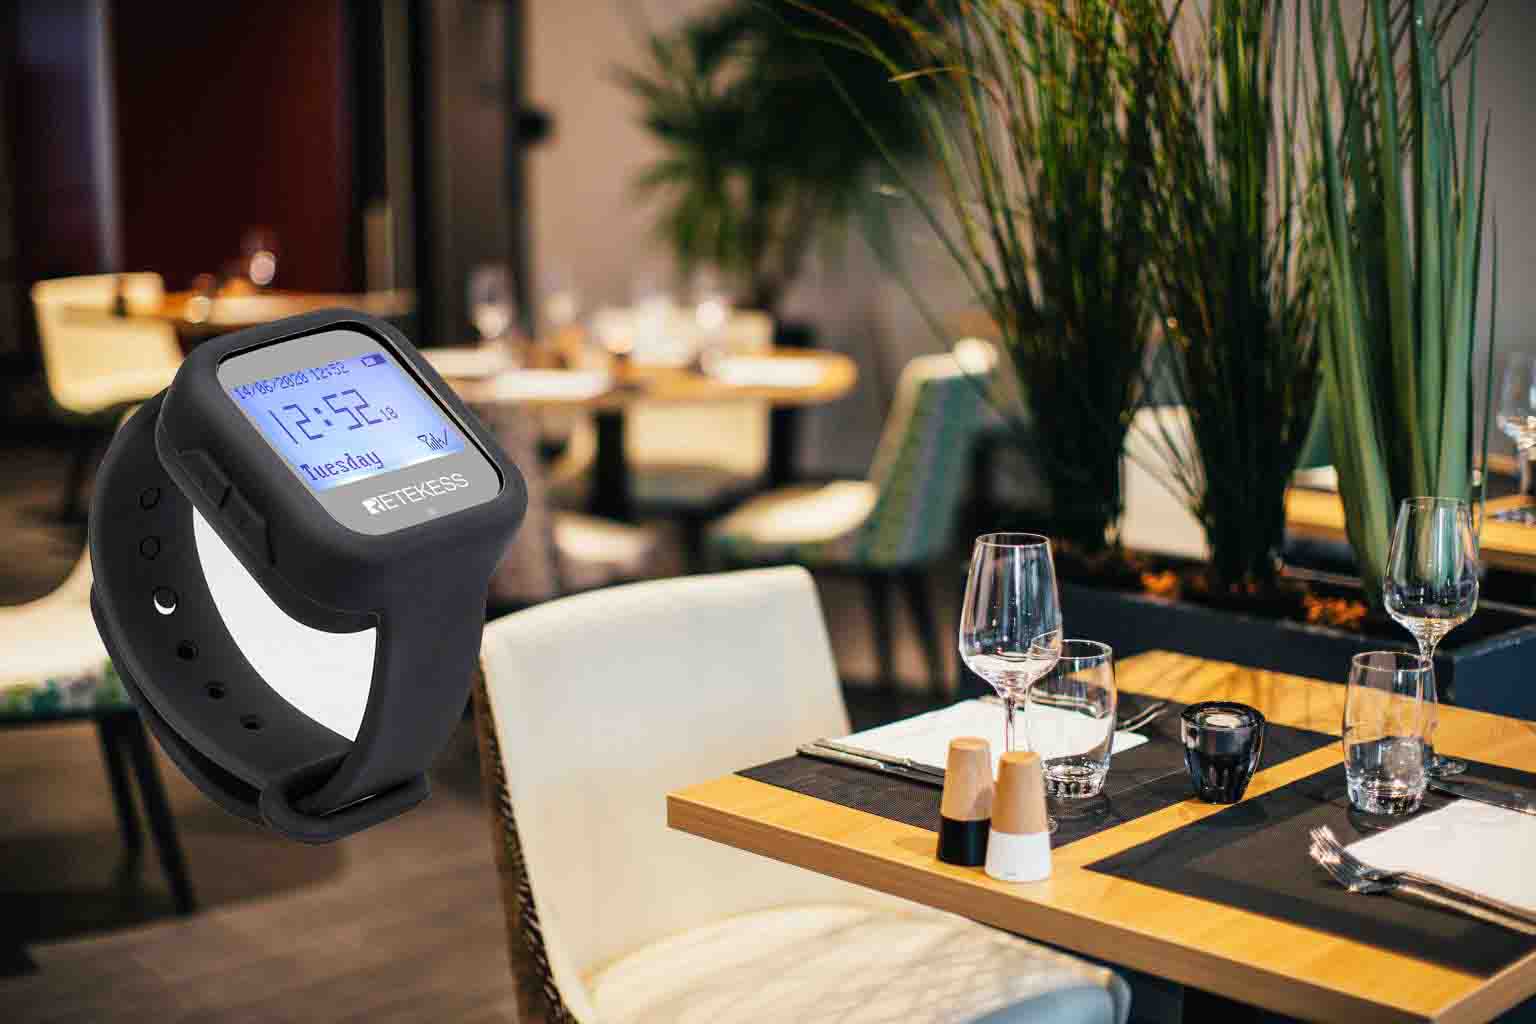 New Arrival Retekess TD106 wireless watch receiver for restaurant